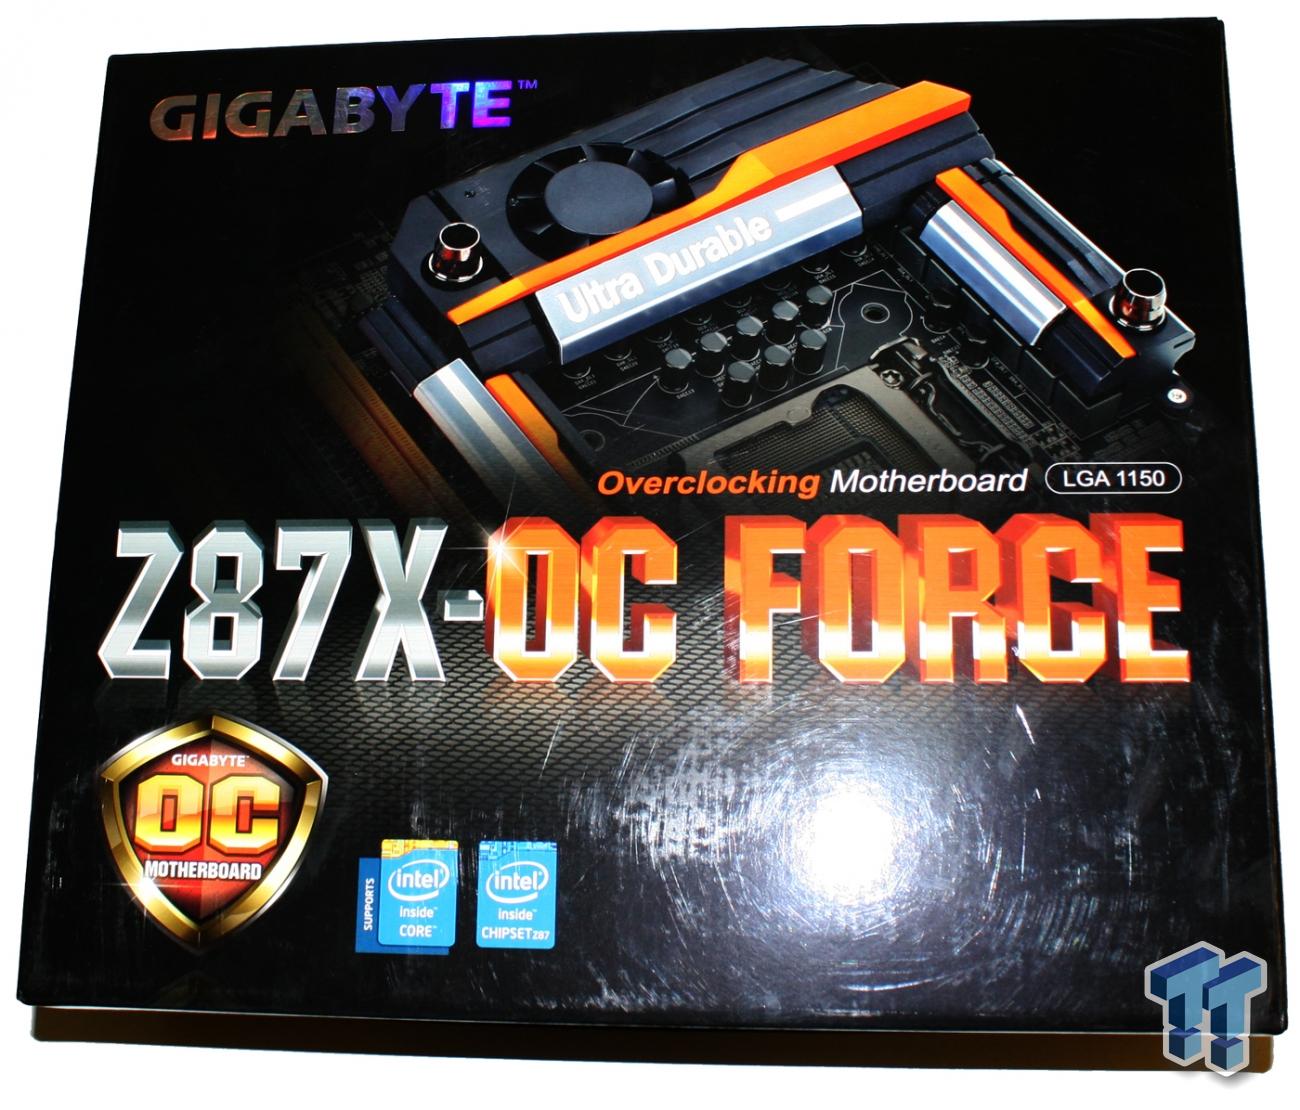 GIGABYTE Z87X-OC Force (Intel Z87) Motherboard Review